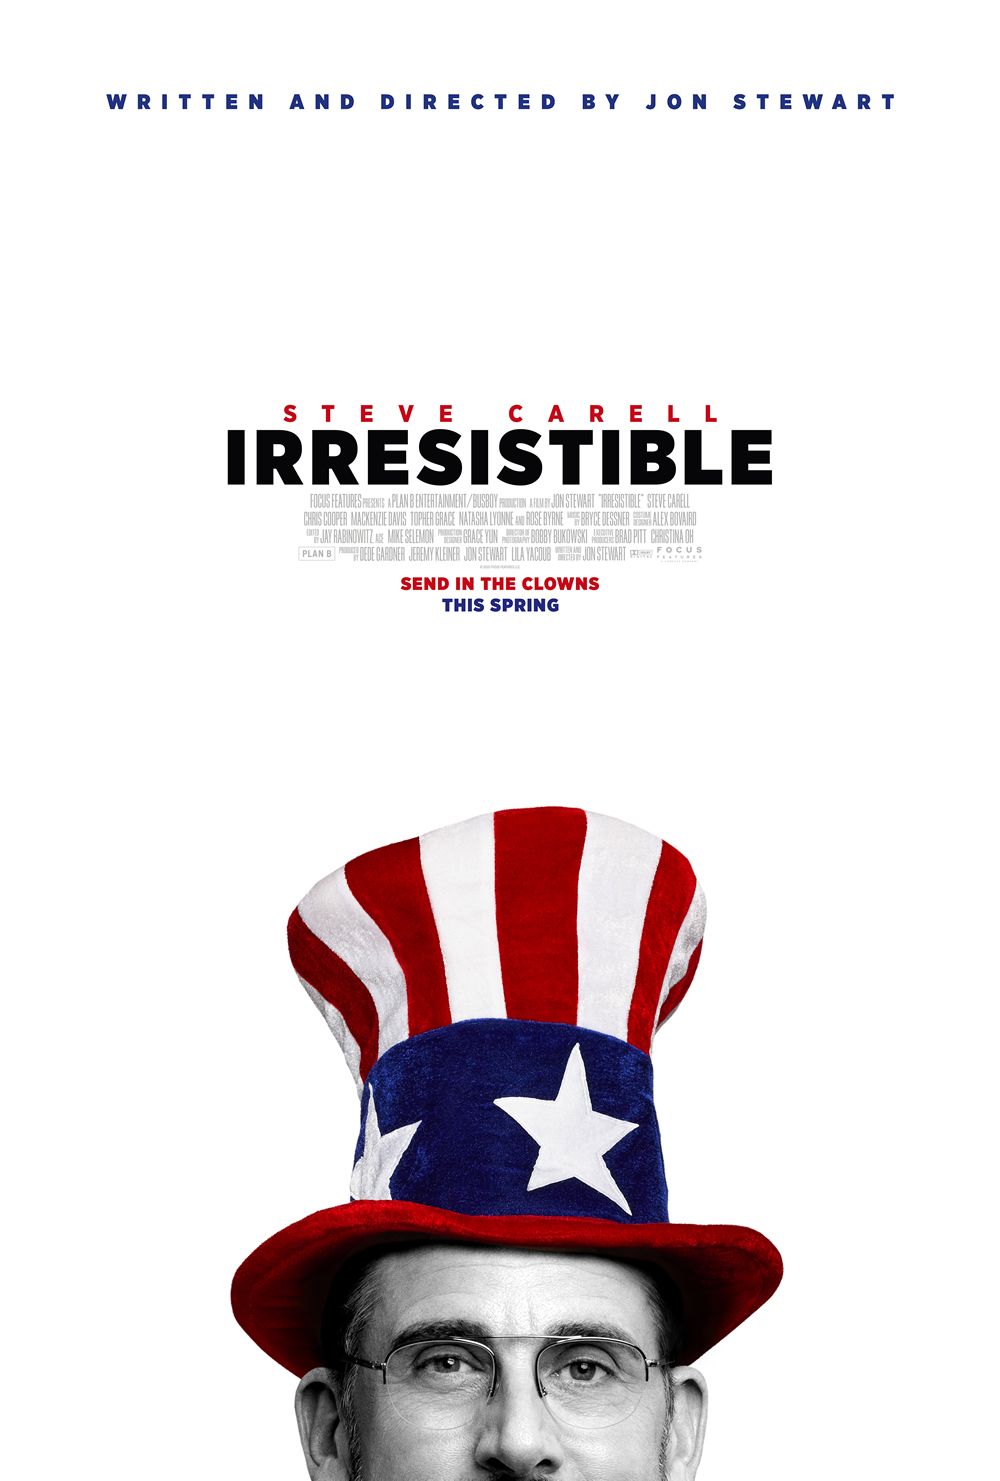 Irresistible Poster Has Jon Stewart Sending in the Clowns | Collider